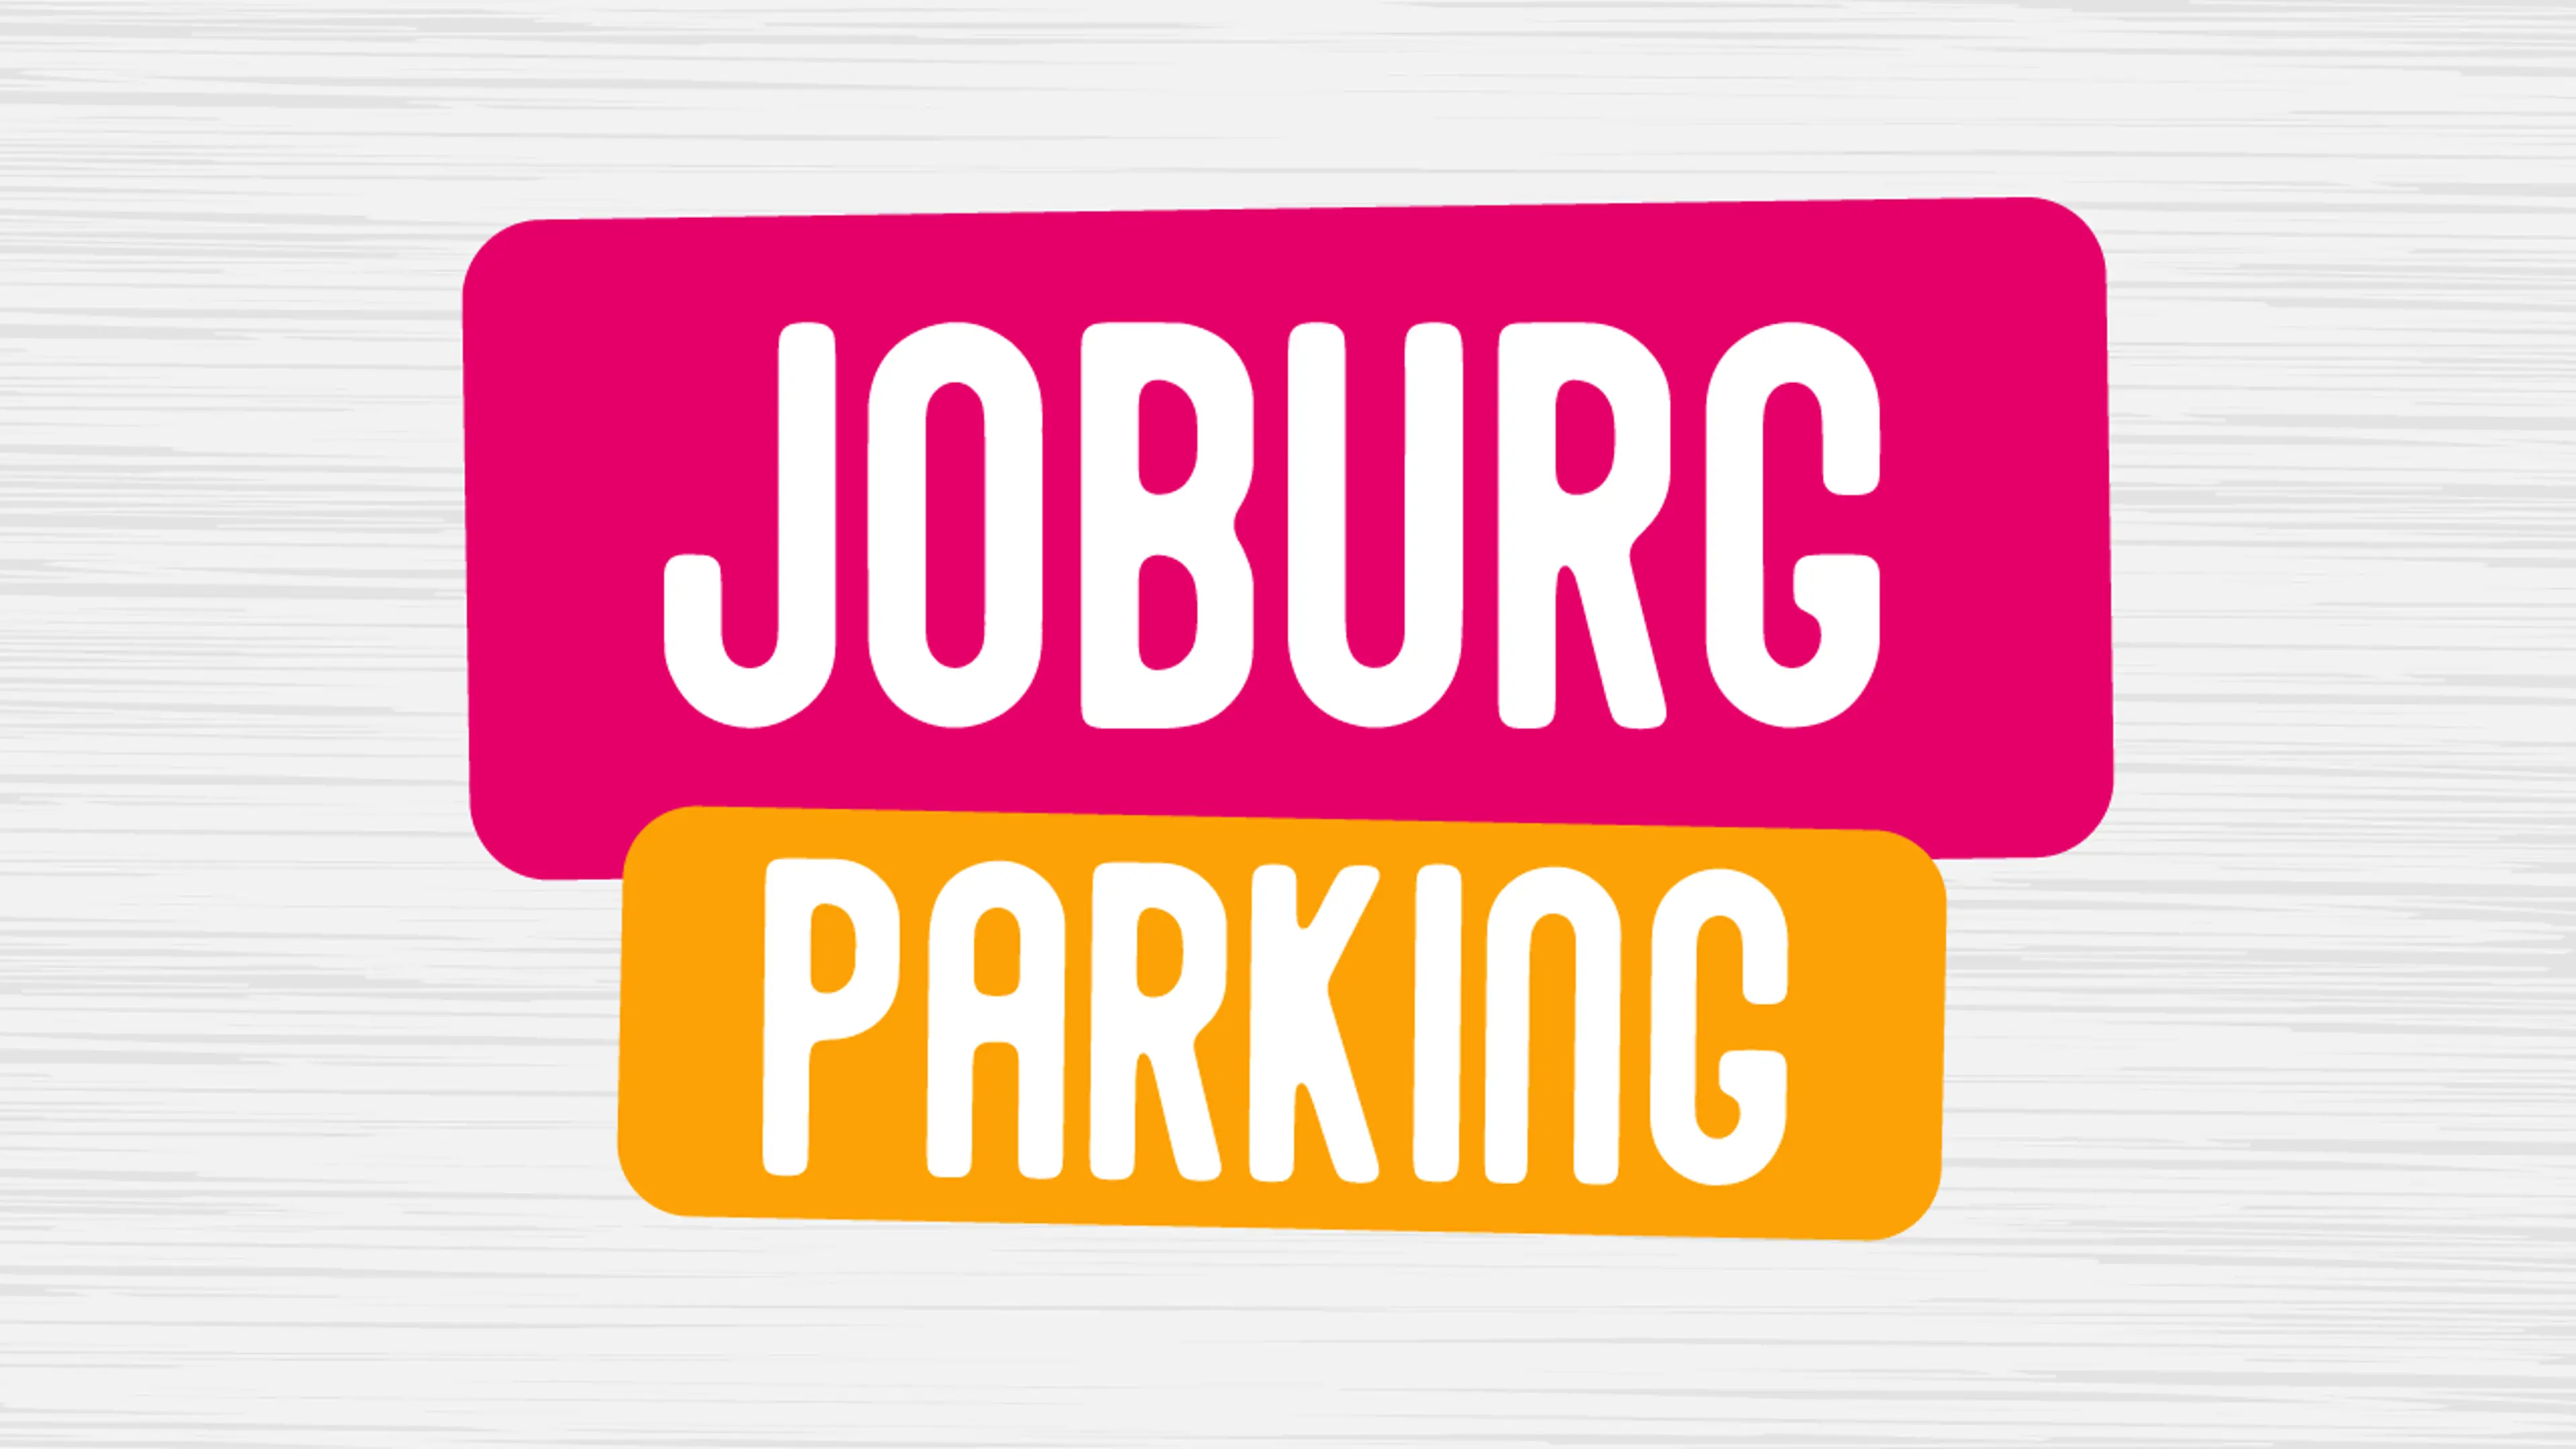 Johannesburg Parking